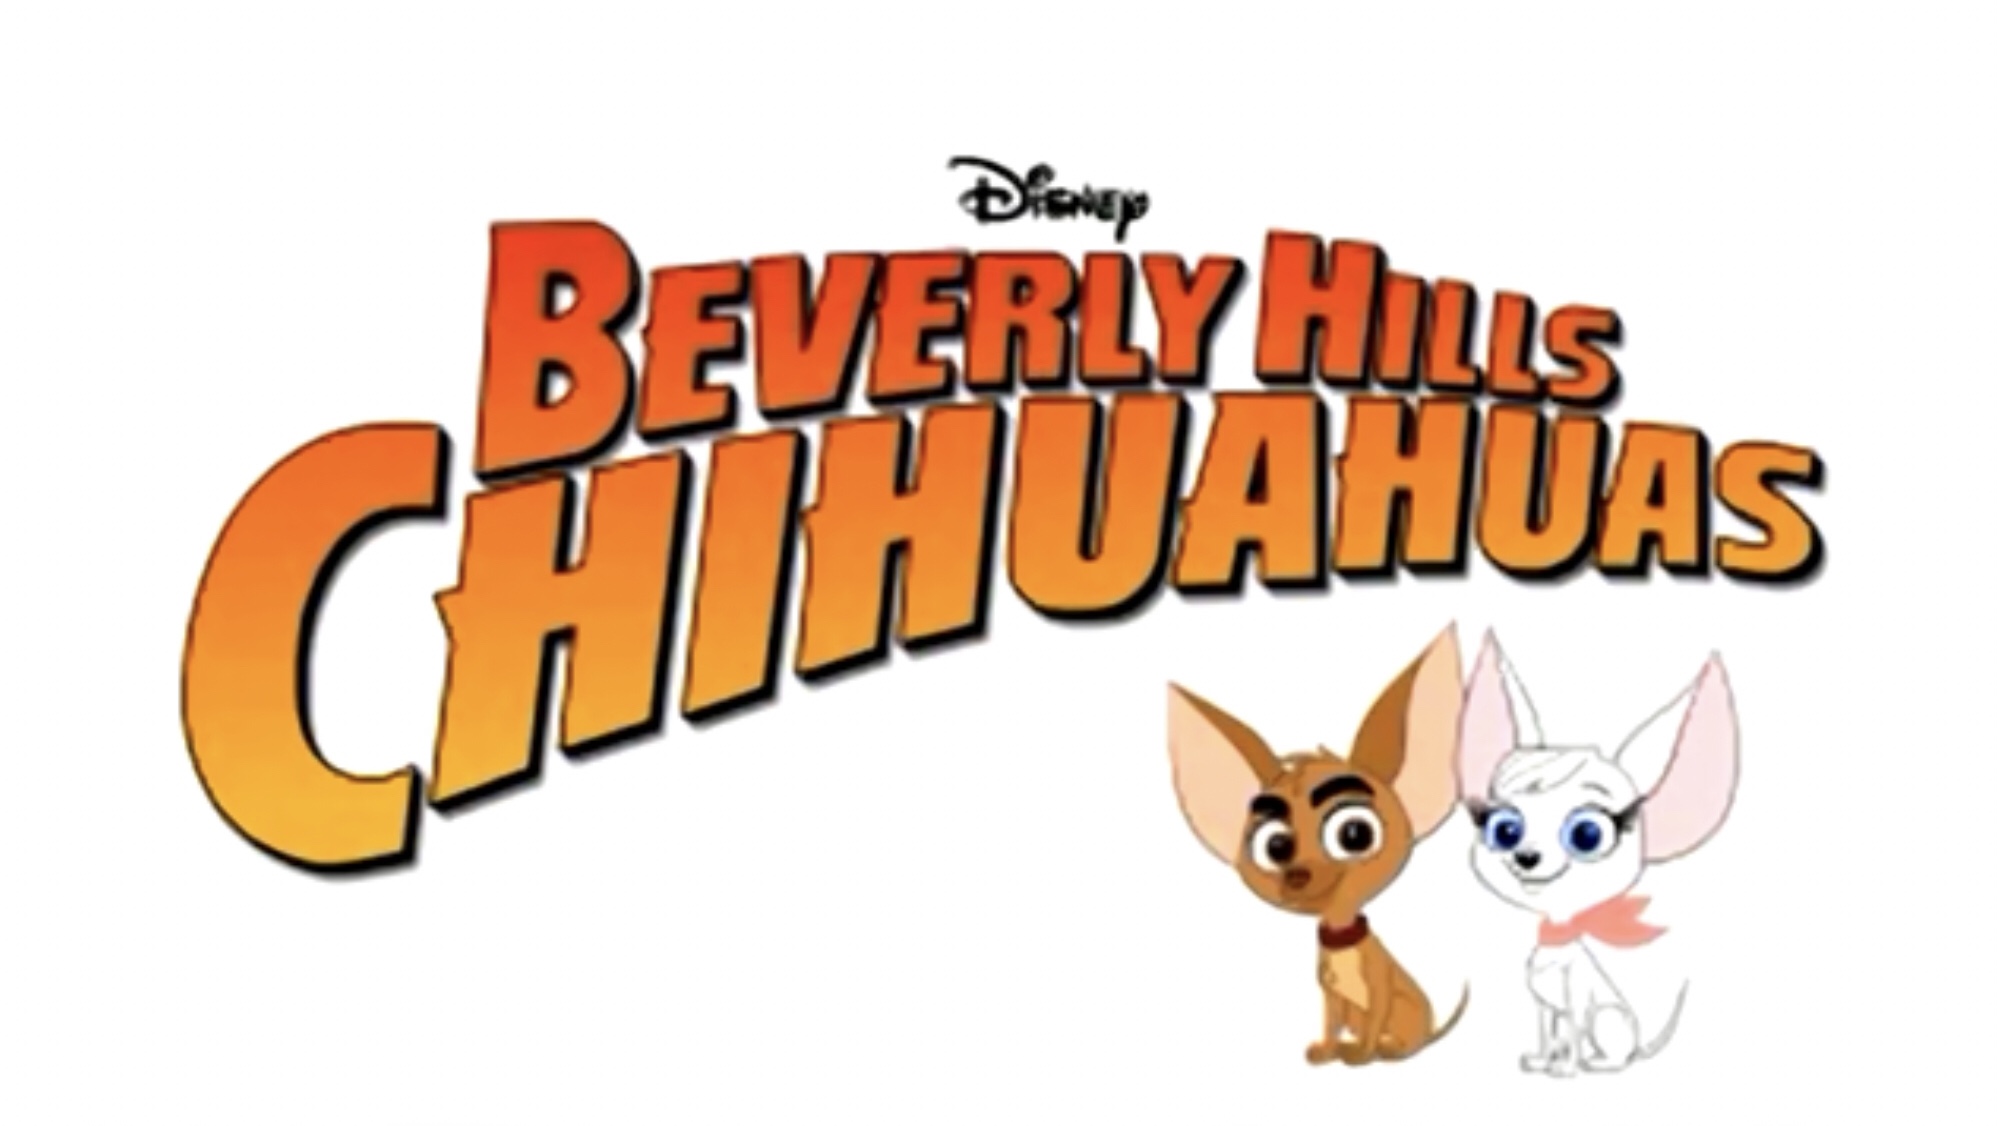 Beverly hills chihuahuas title.jpeg